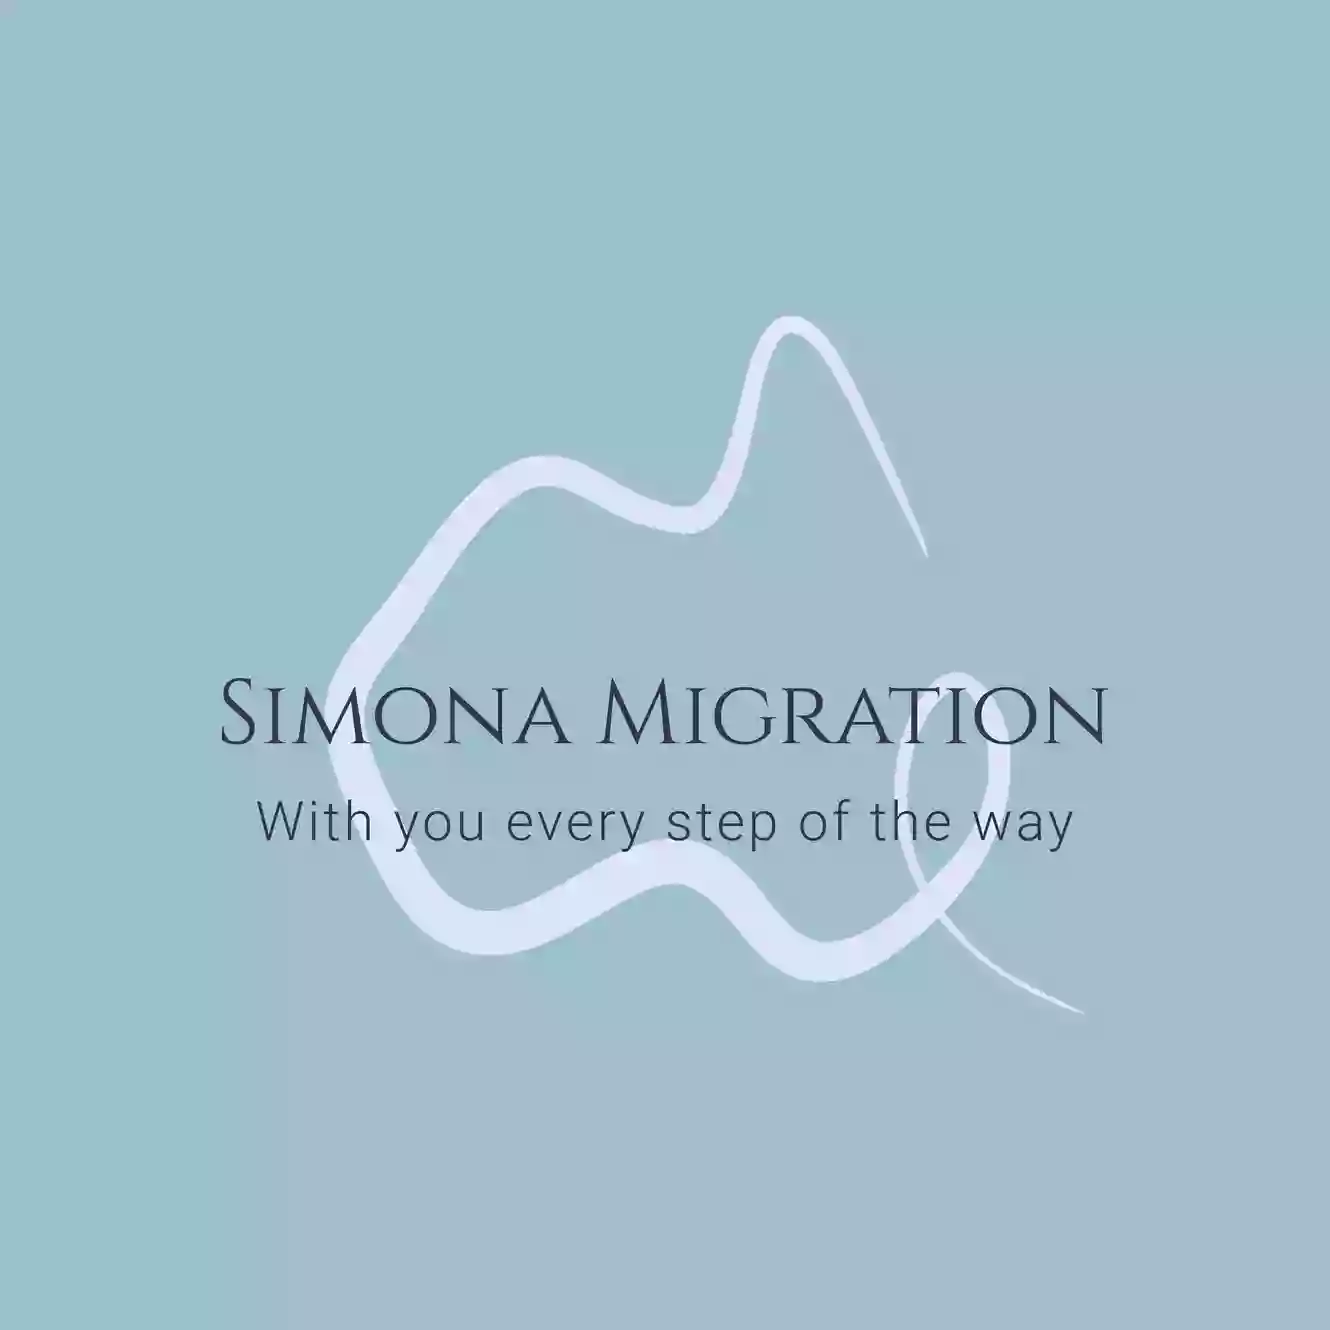 Simona Migration